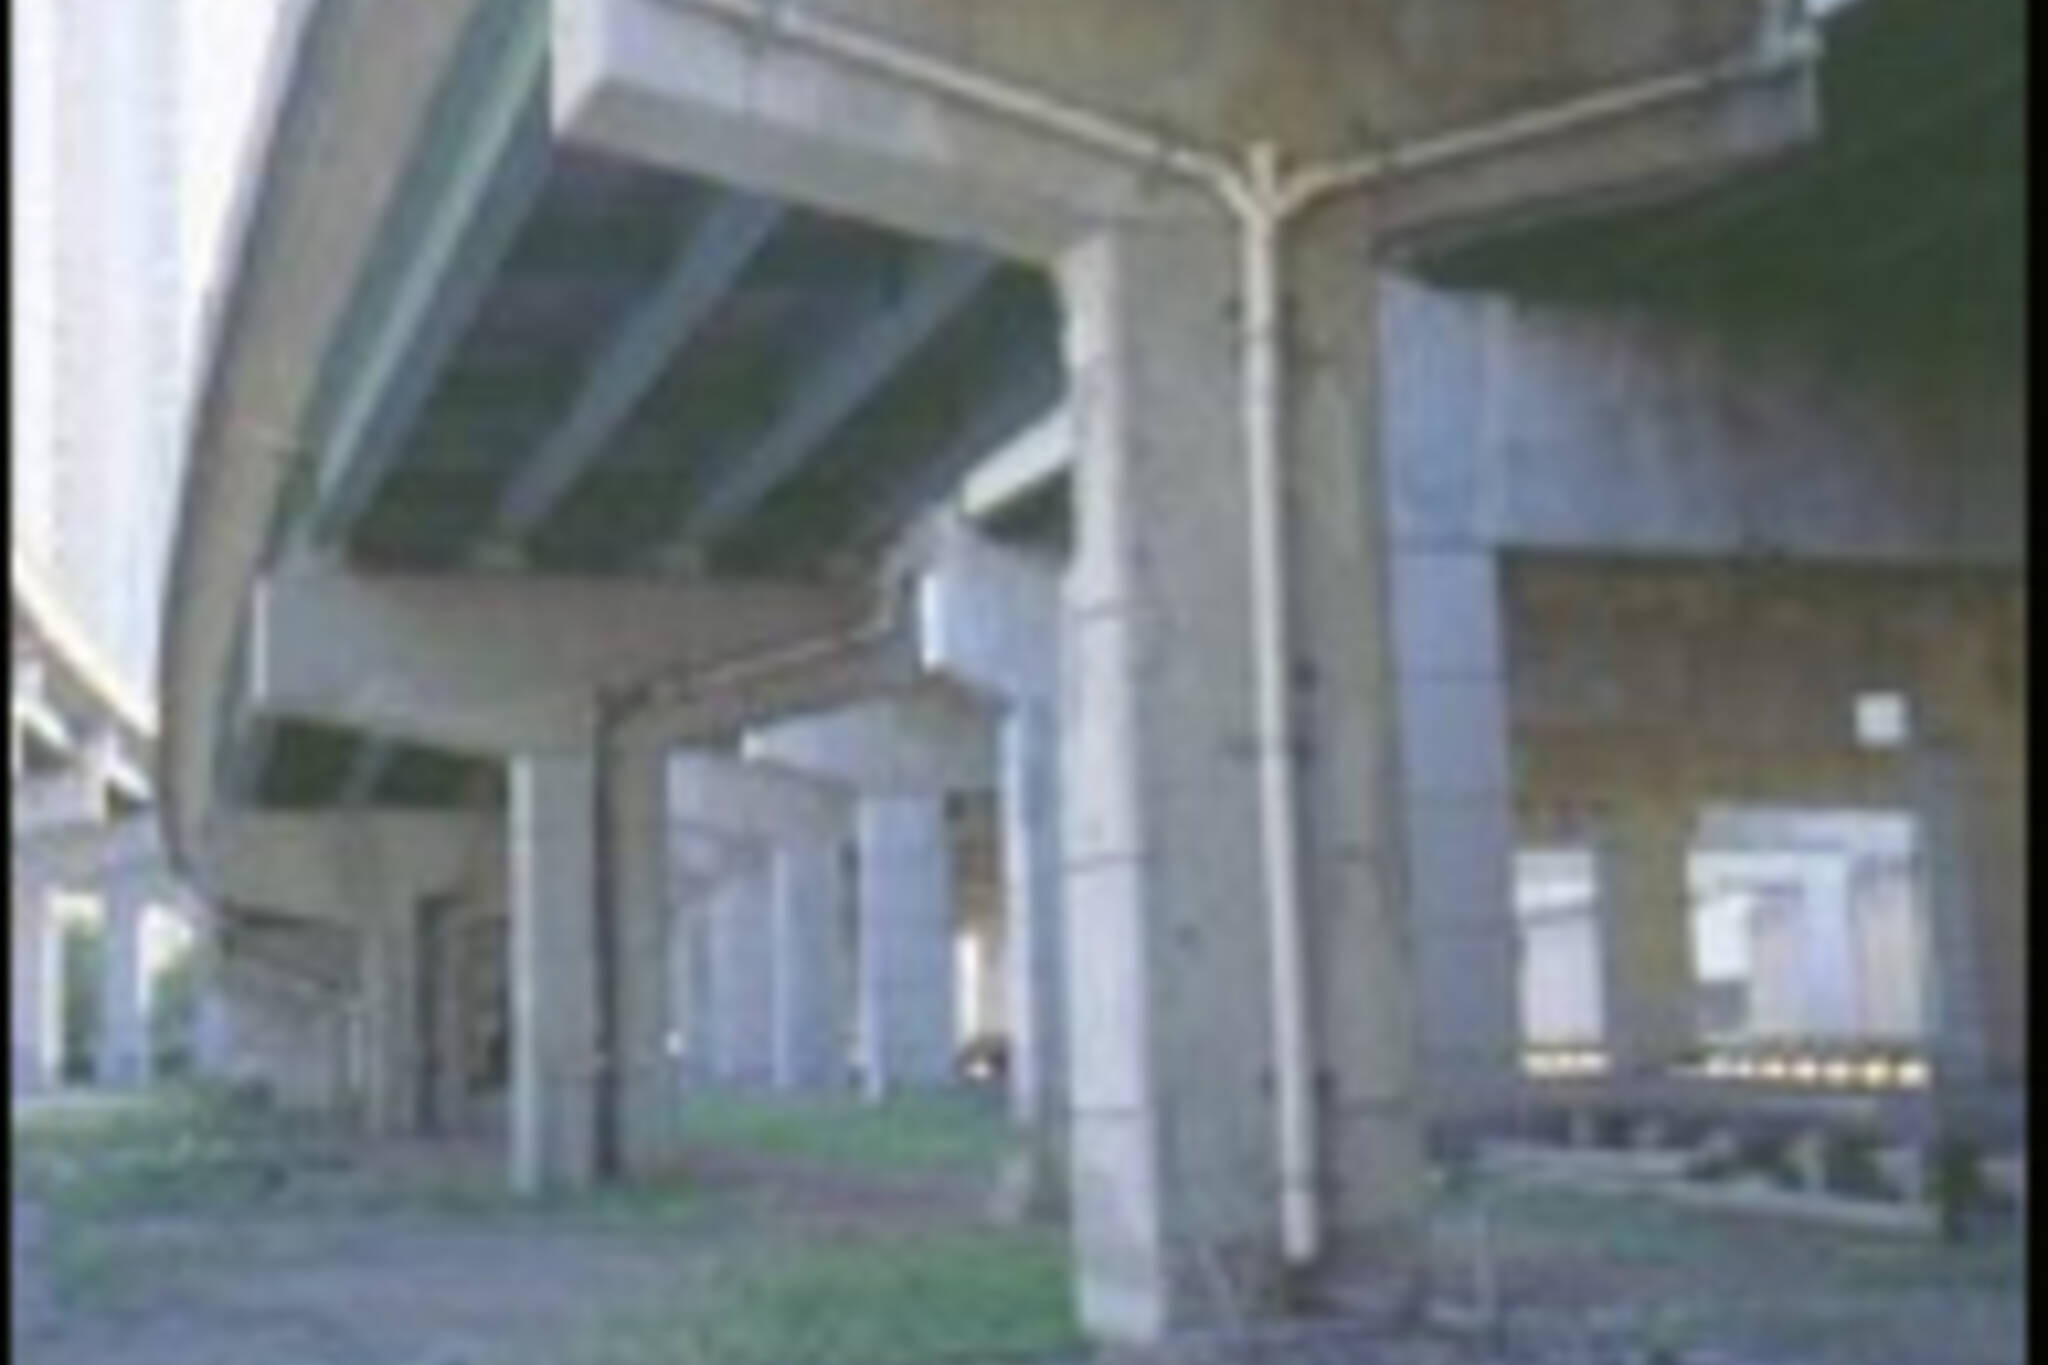 The concrete jungle that is undeneath the Gardiner Expressway.  Photo from www.civ.utoronto.ca